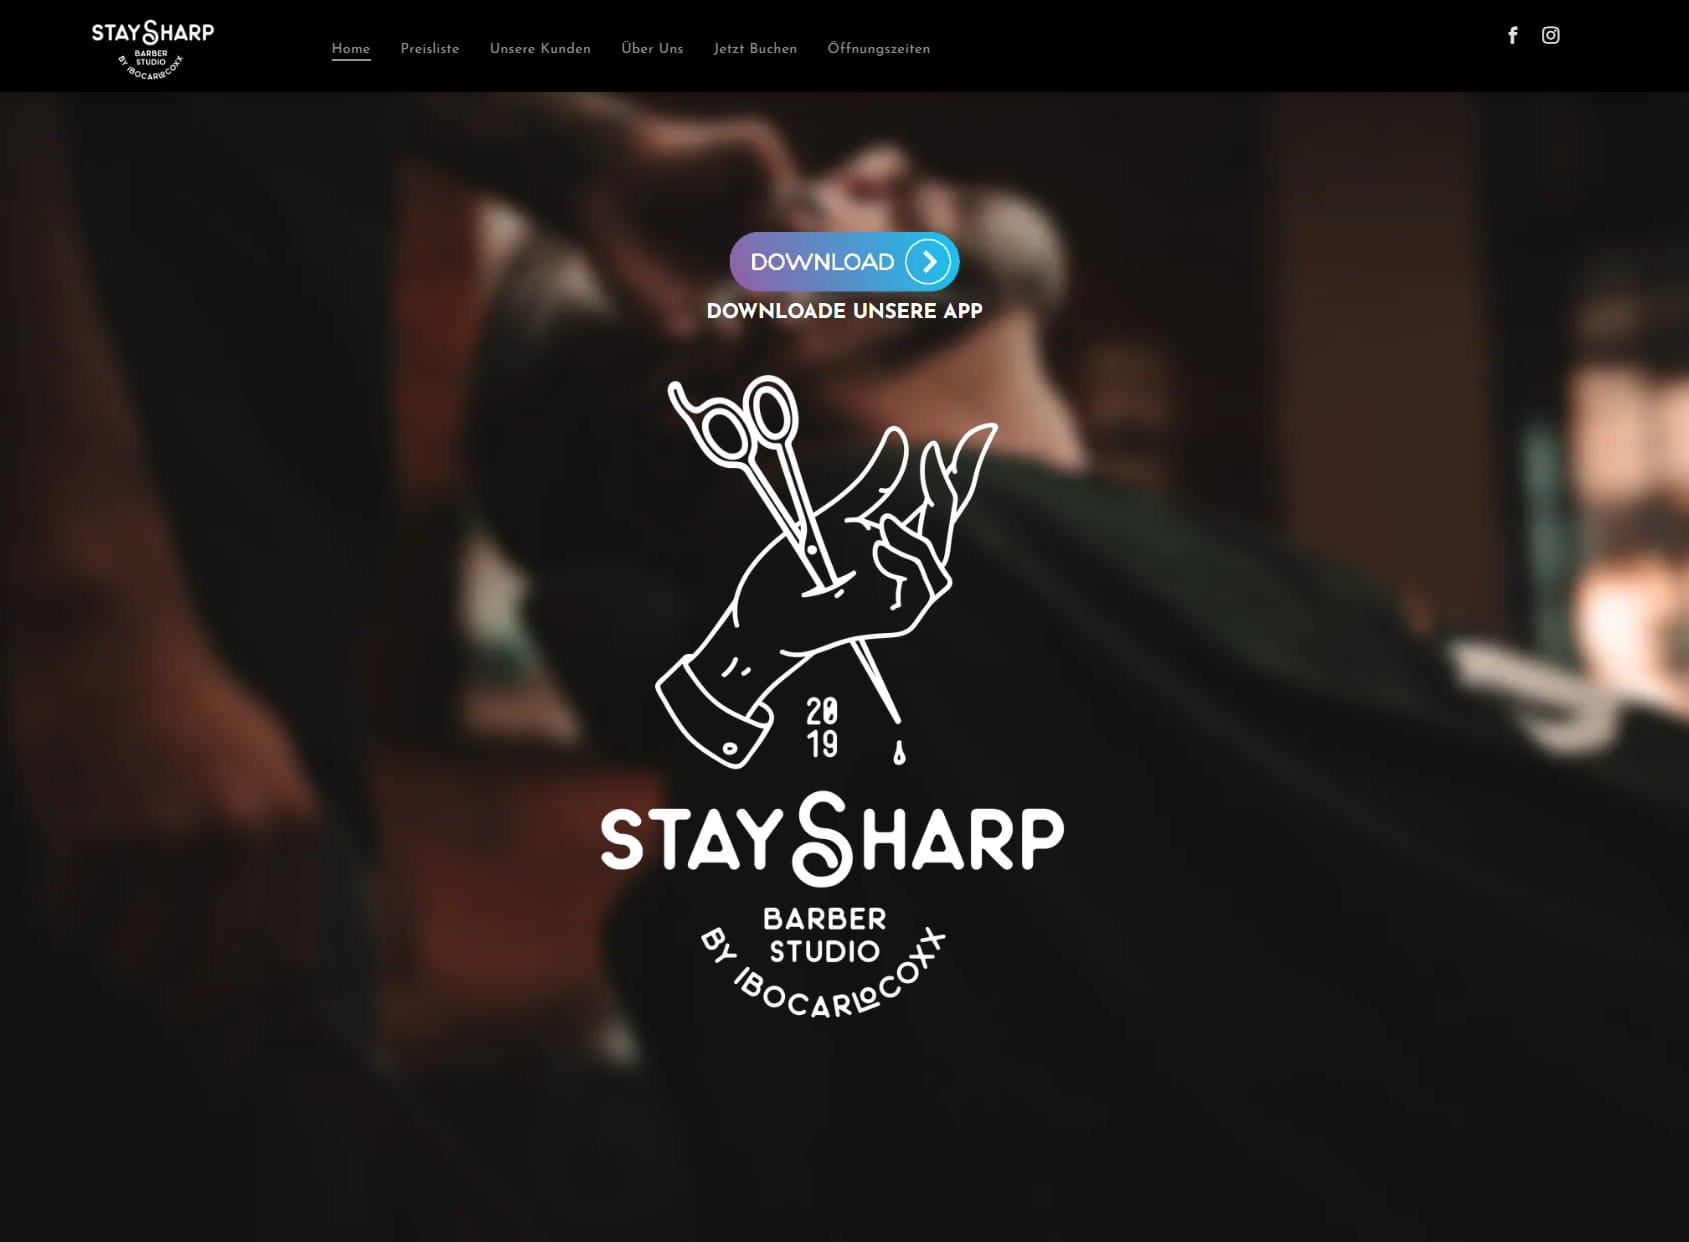 Stay Sharp Barberstudio by ibocarlocoxx